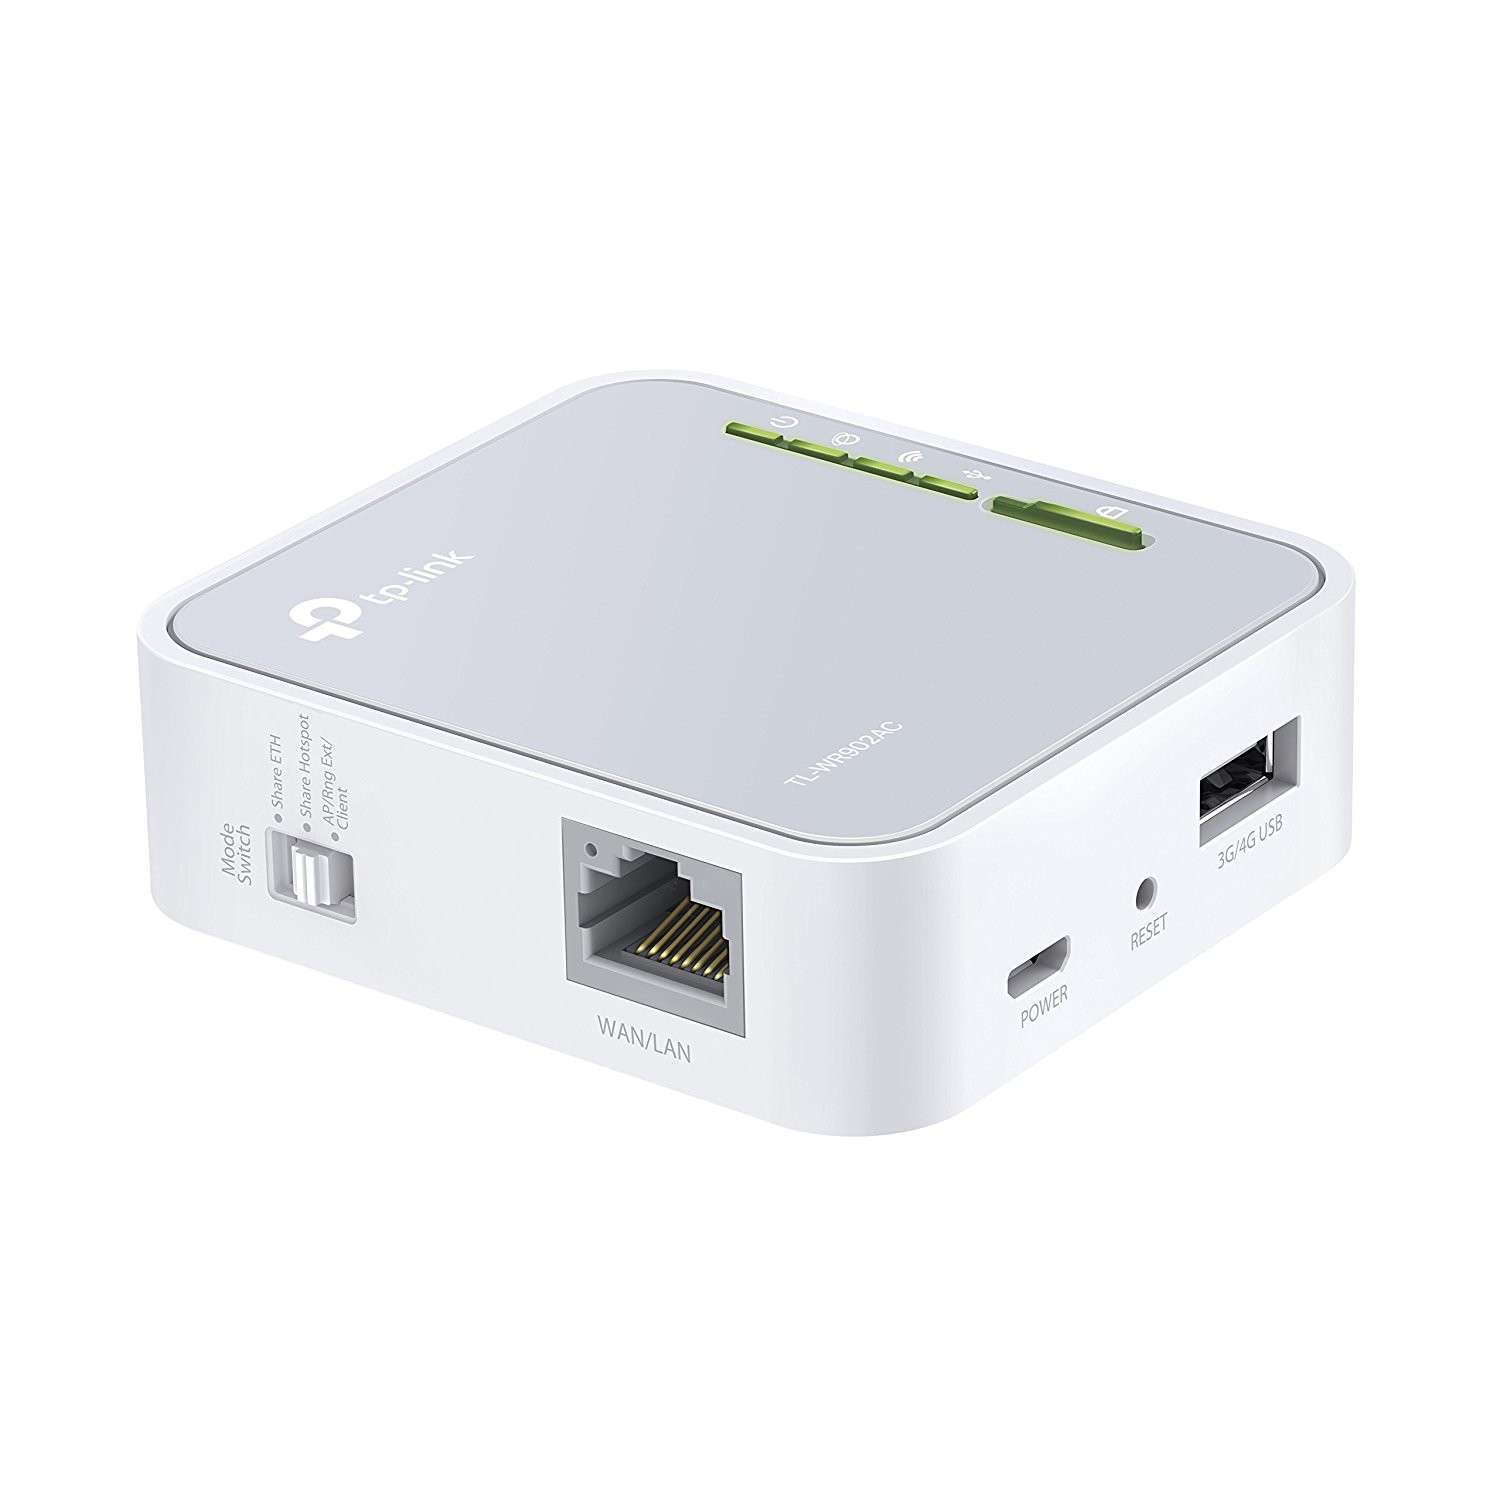 Point d'accès TP-LINK WiFi N 300Mbps - Blanc (TL-WA801N)